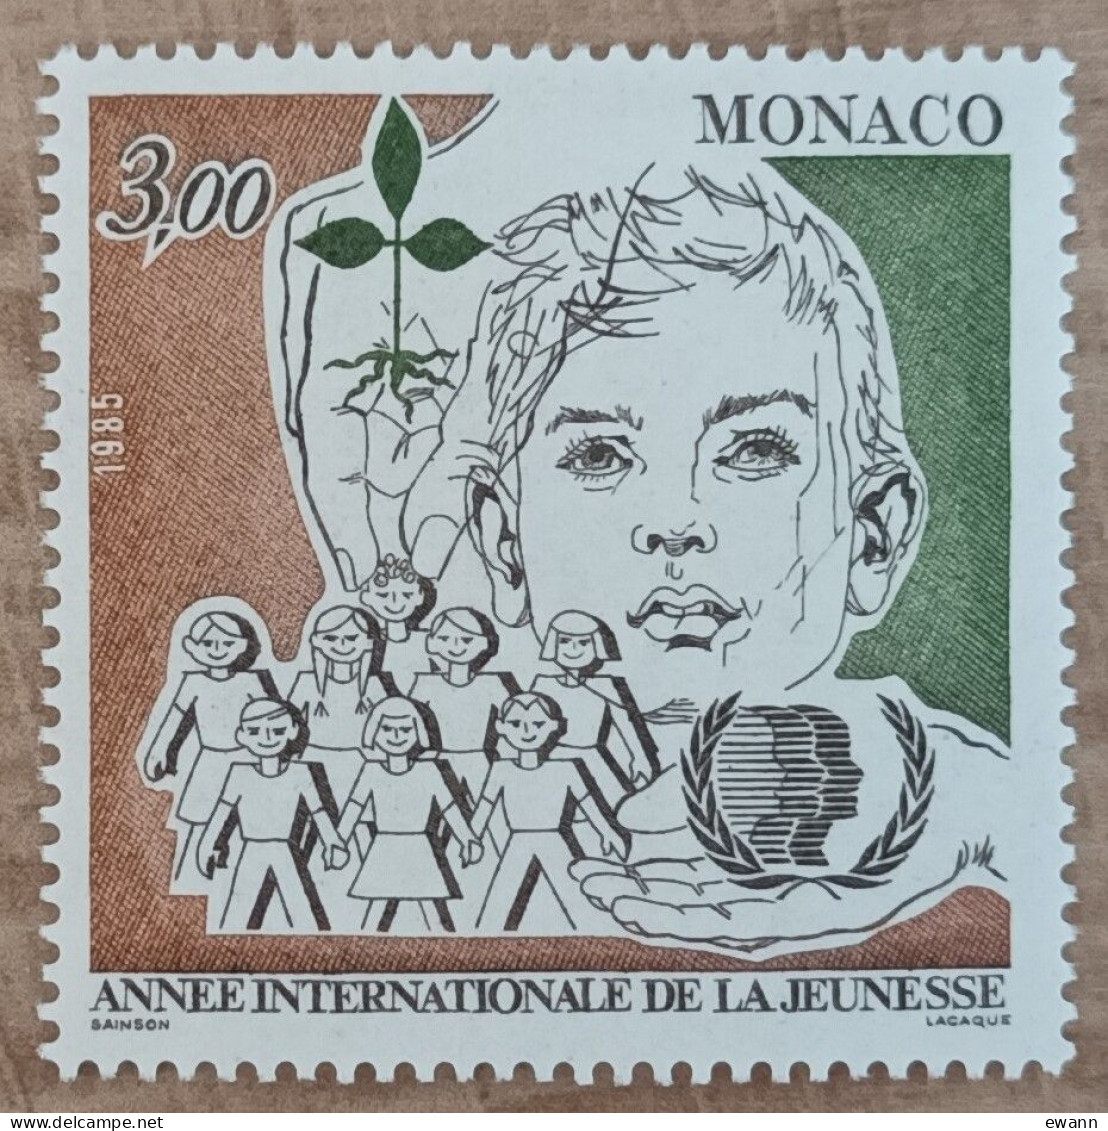 Monaco - YT N°1478 - Année Internationale De La Jeunesse - 1985 - Neuf - Nuovi